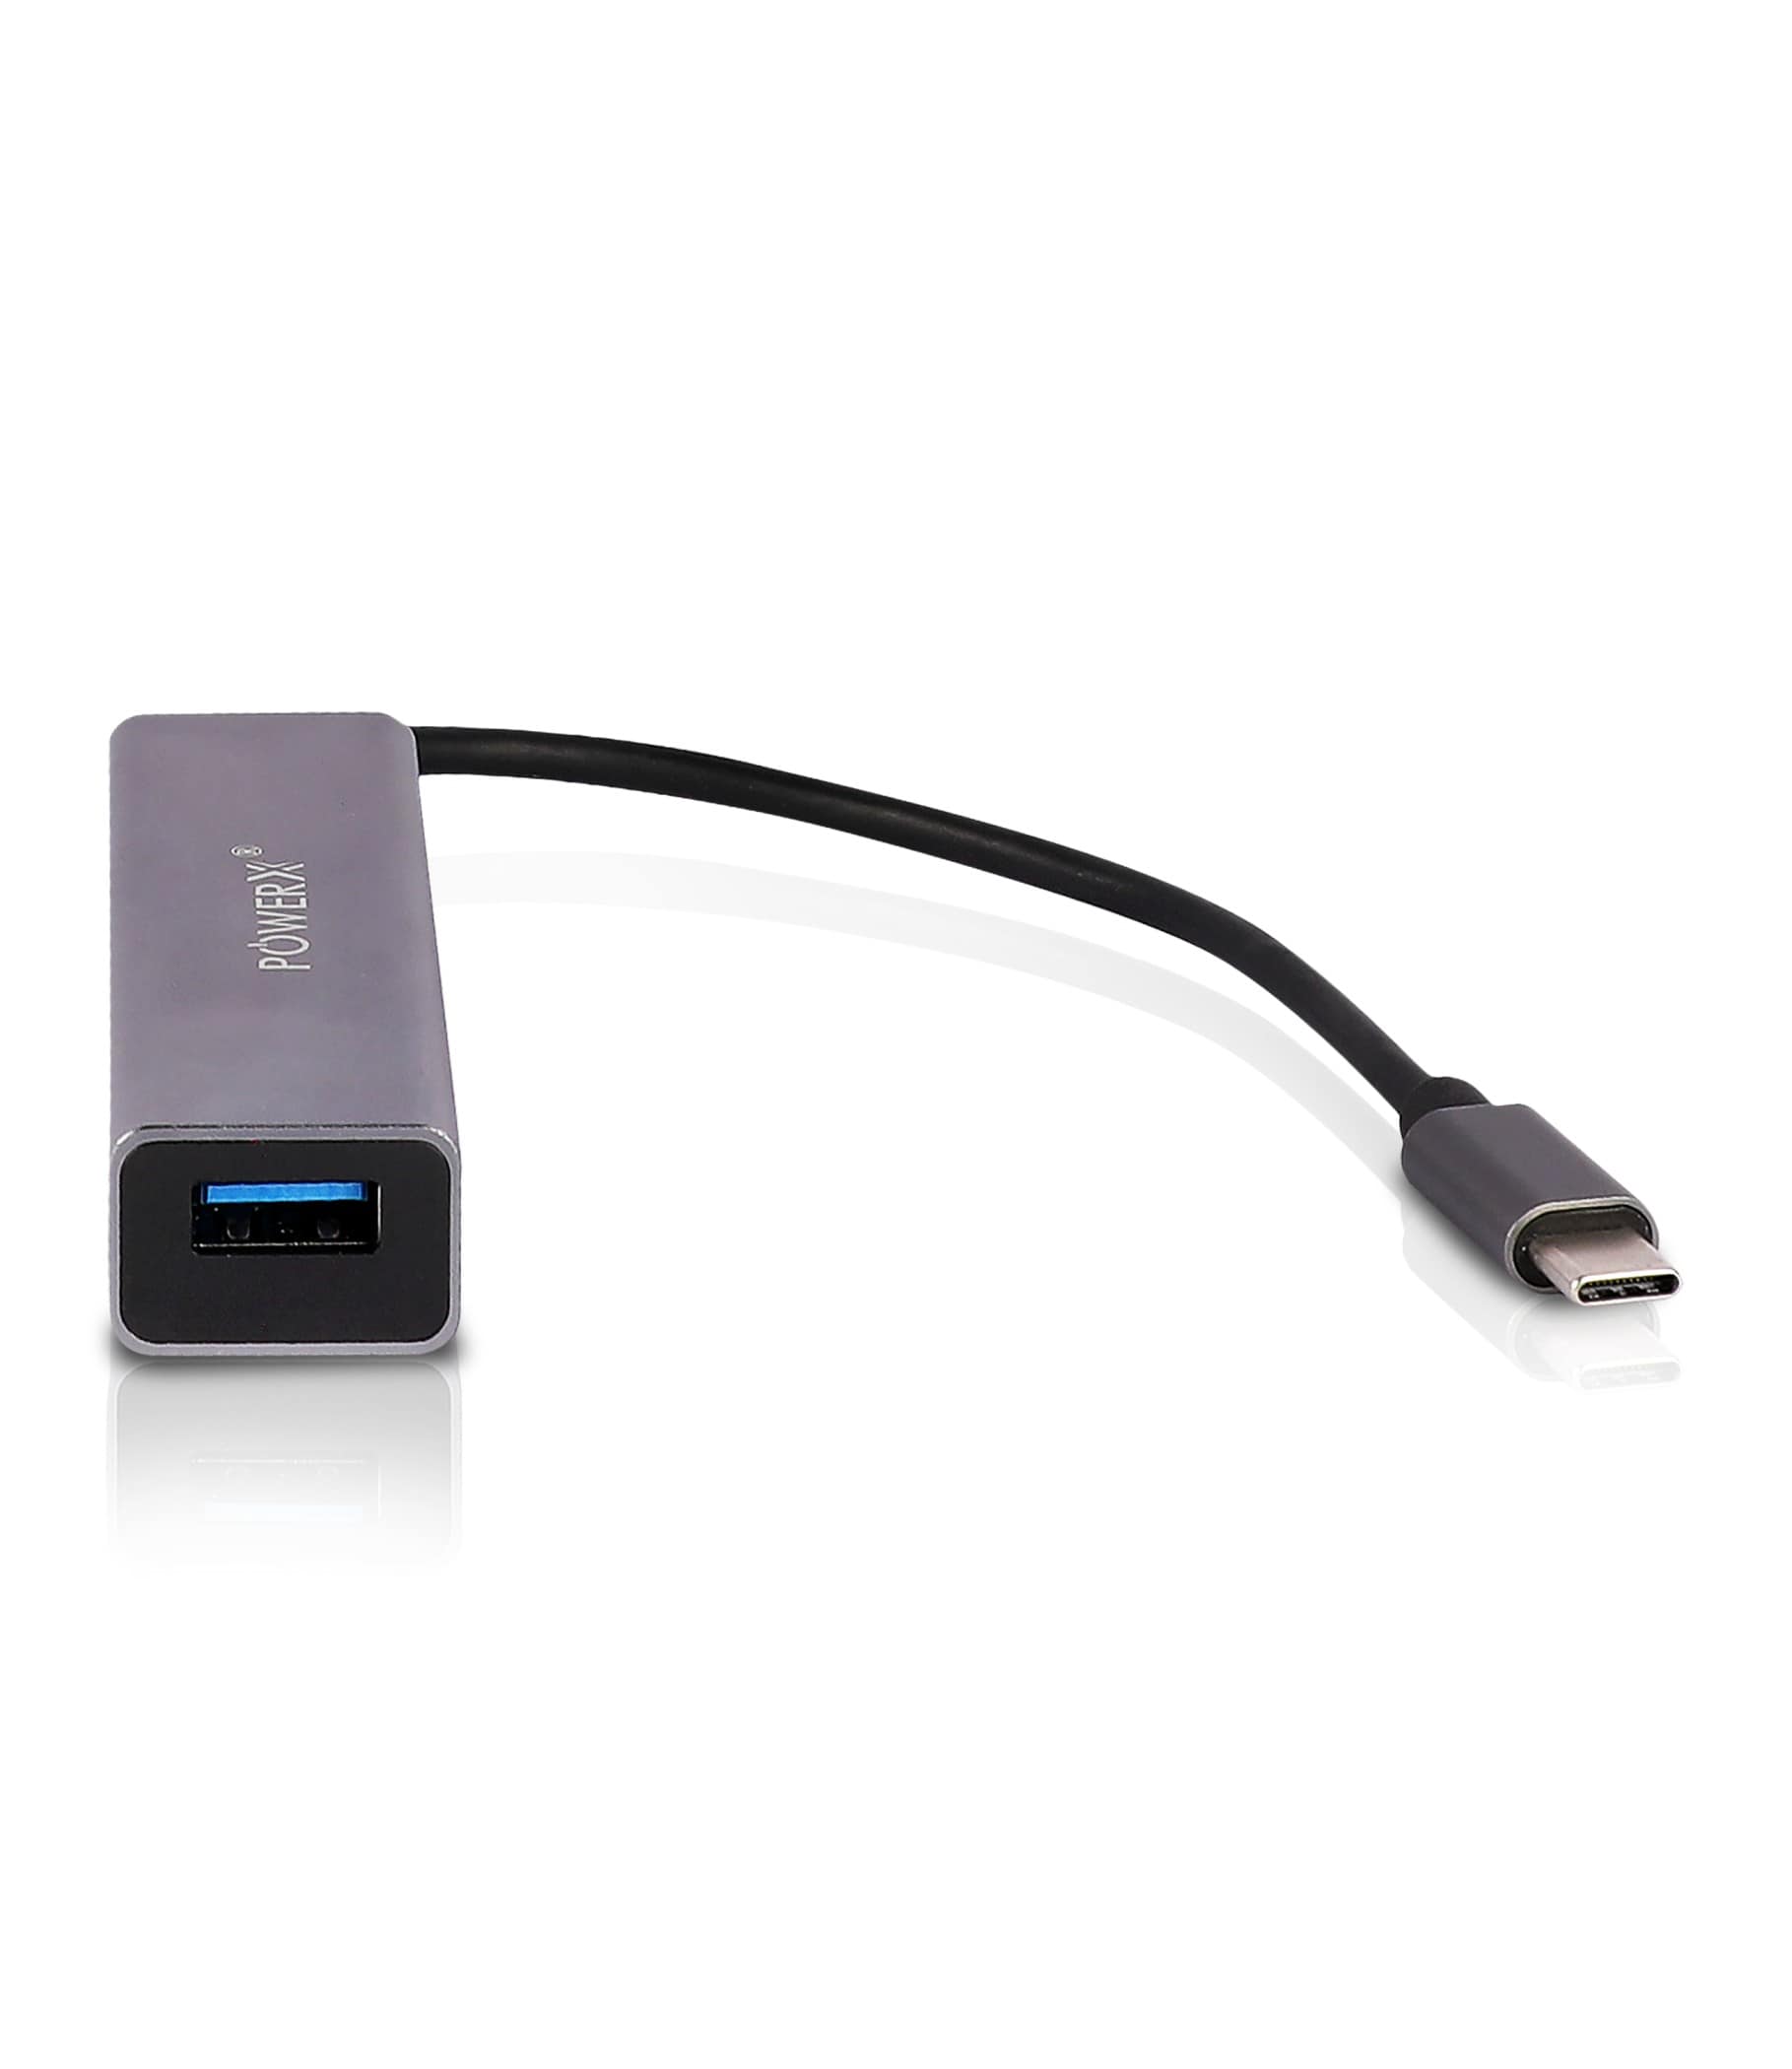 POWERX USB 3.1 TYPE C TO 4 PORT USB HUB